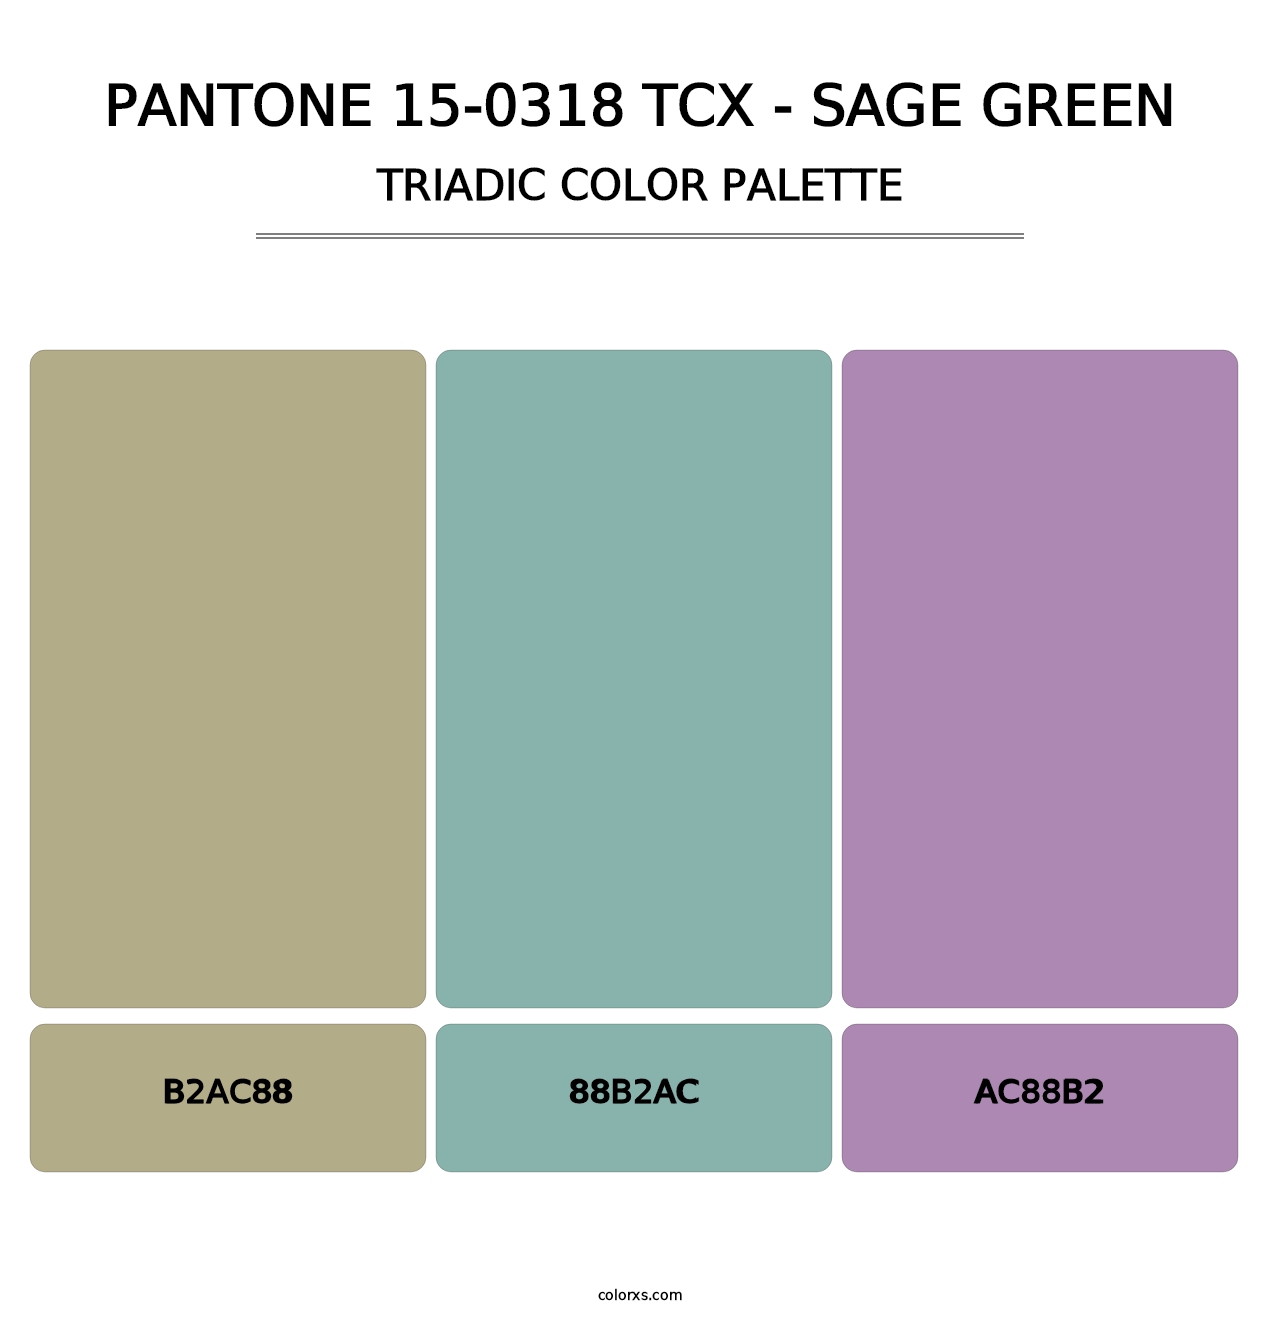 PANTONE 15-0318 TCX - Sage Green - Triadic Color Palette